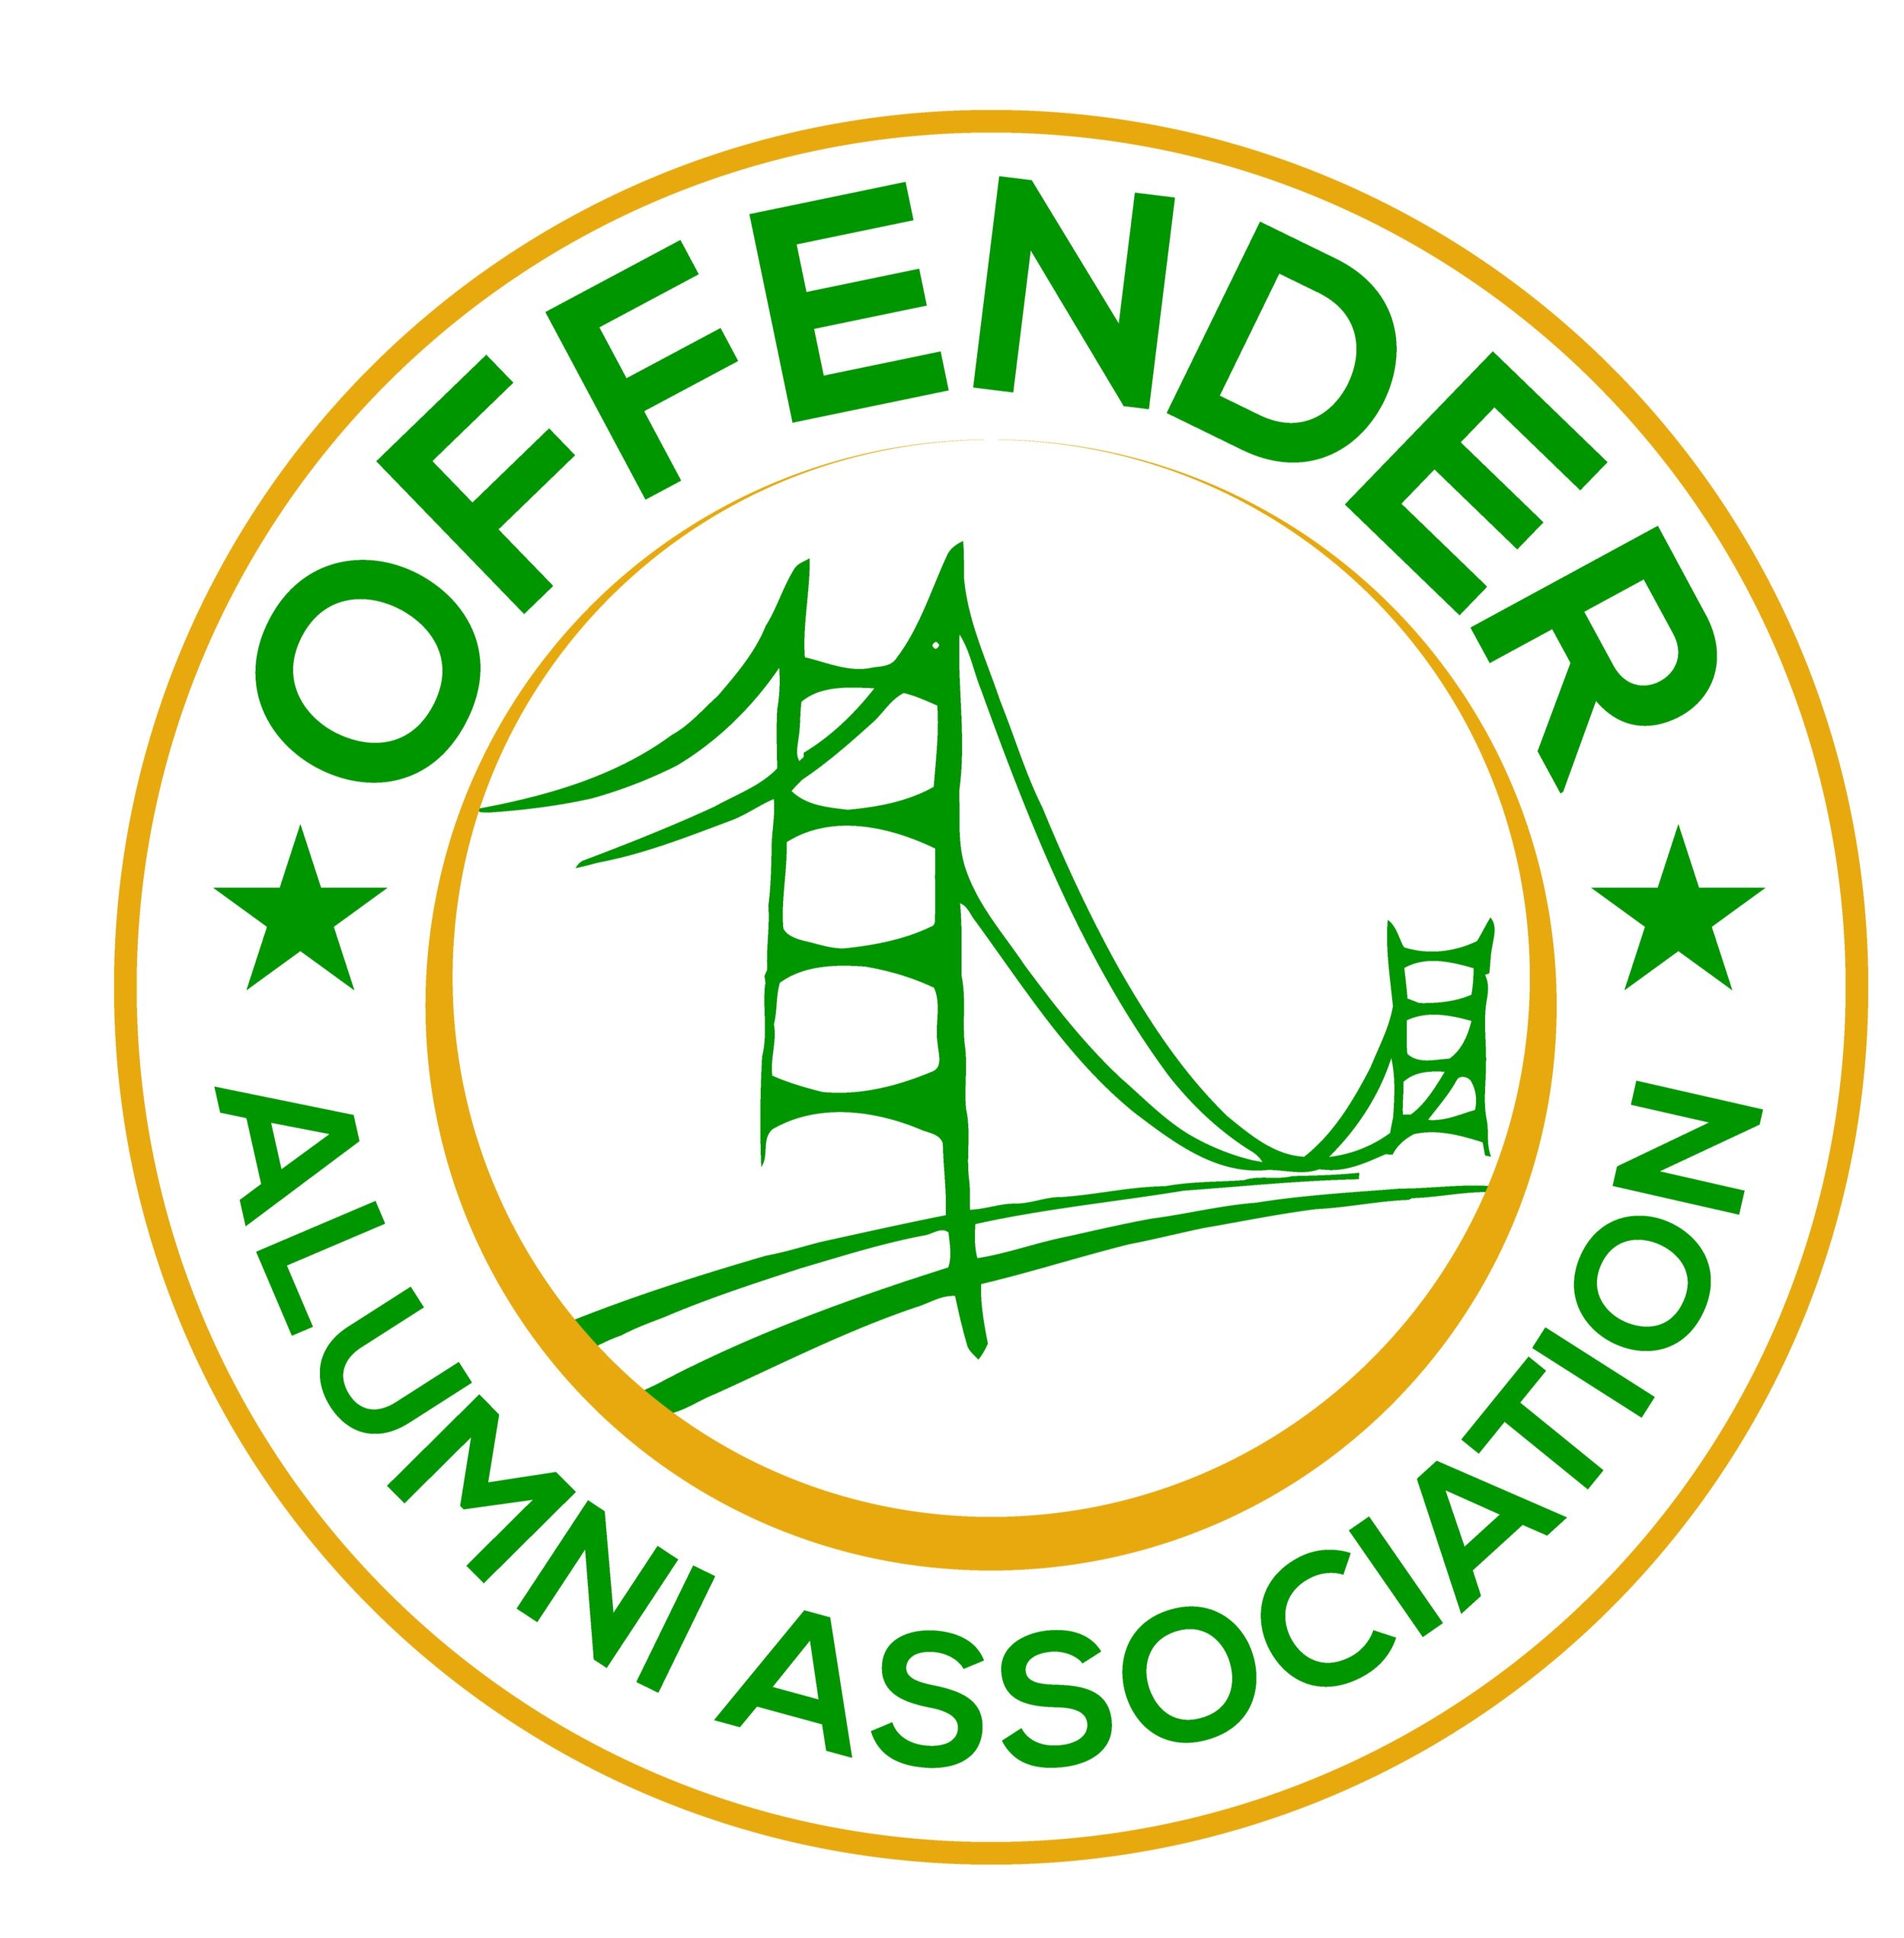 Offender Alumni Association